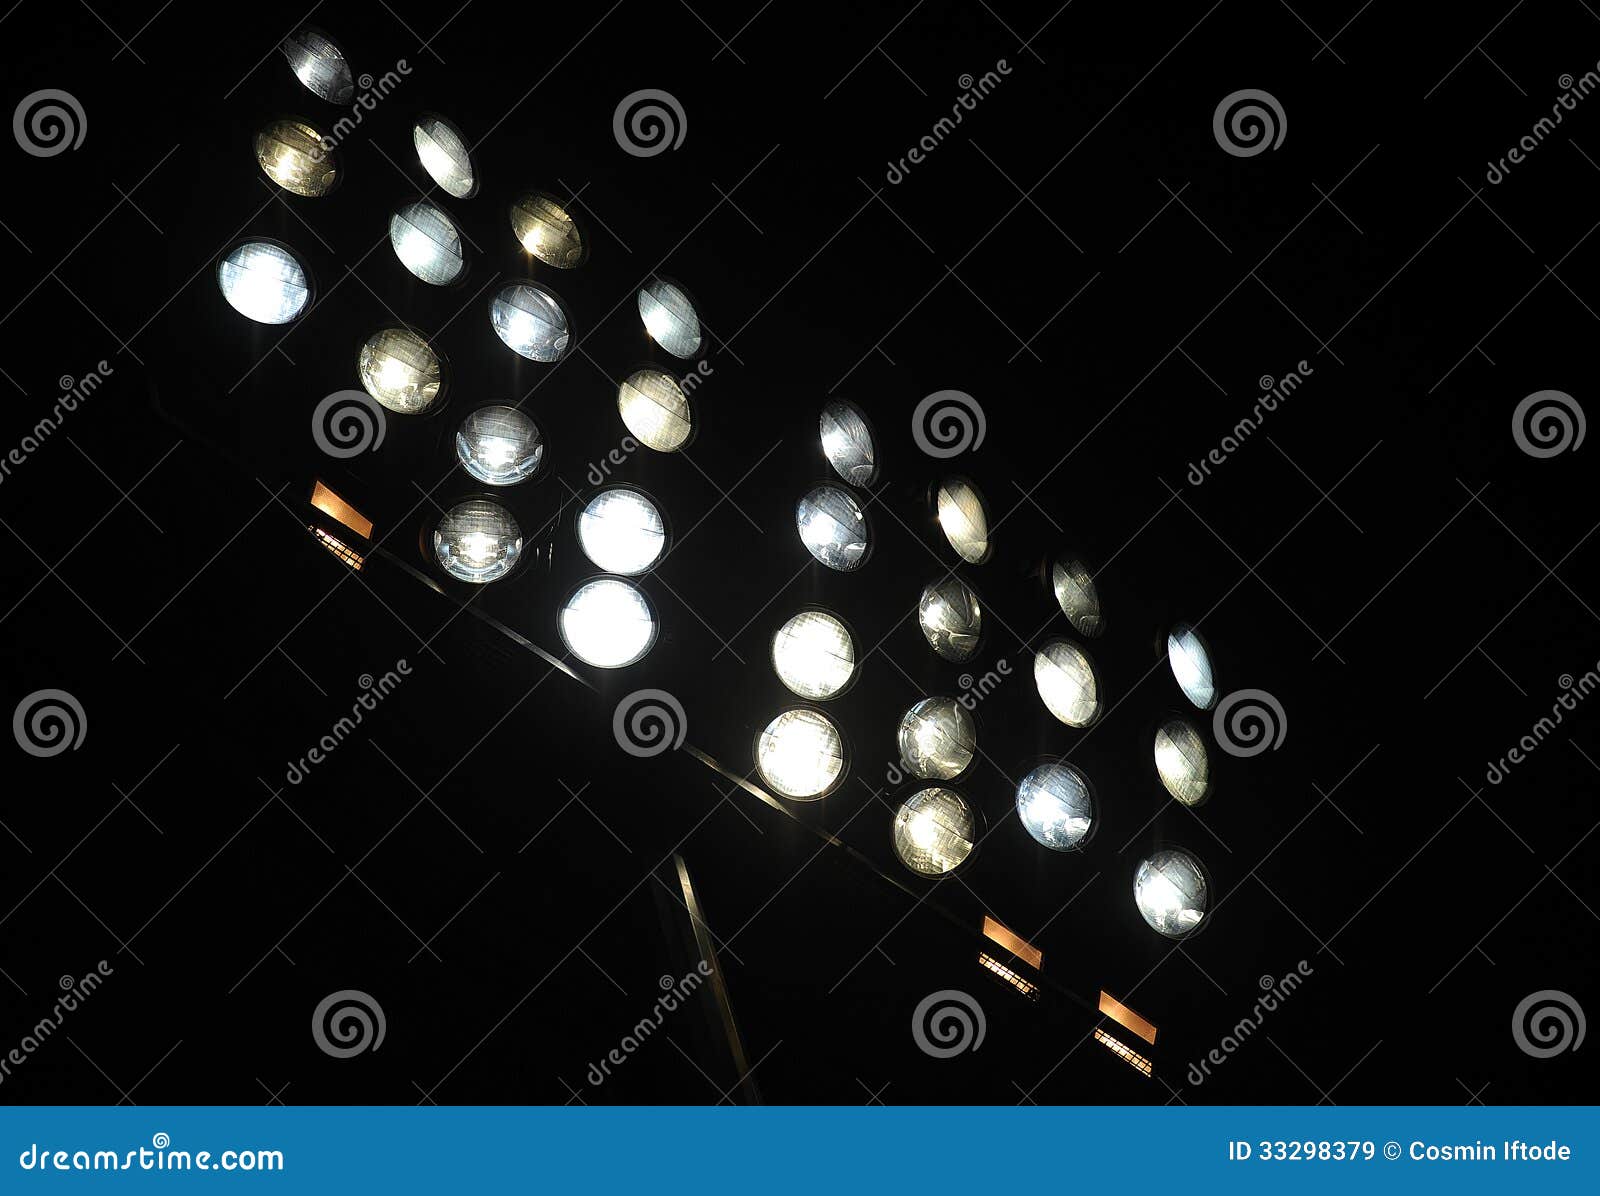 football stadium nocturne powerfull lights on dark background